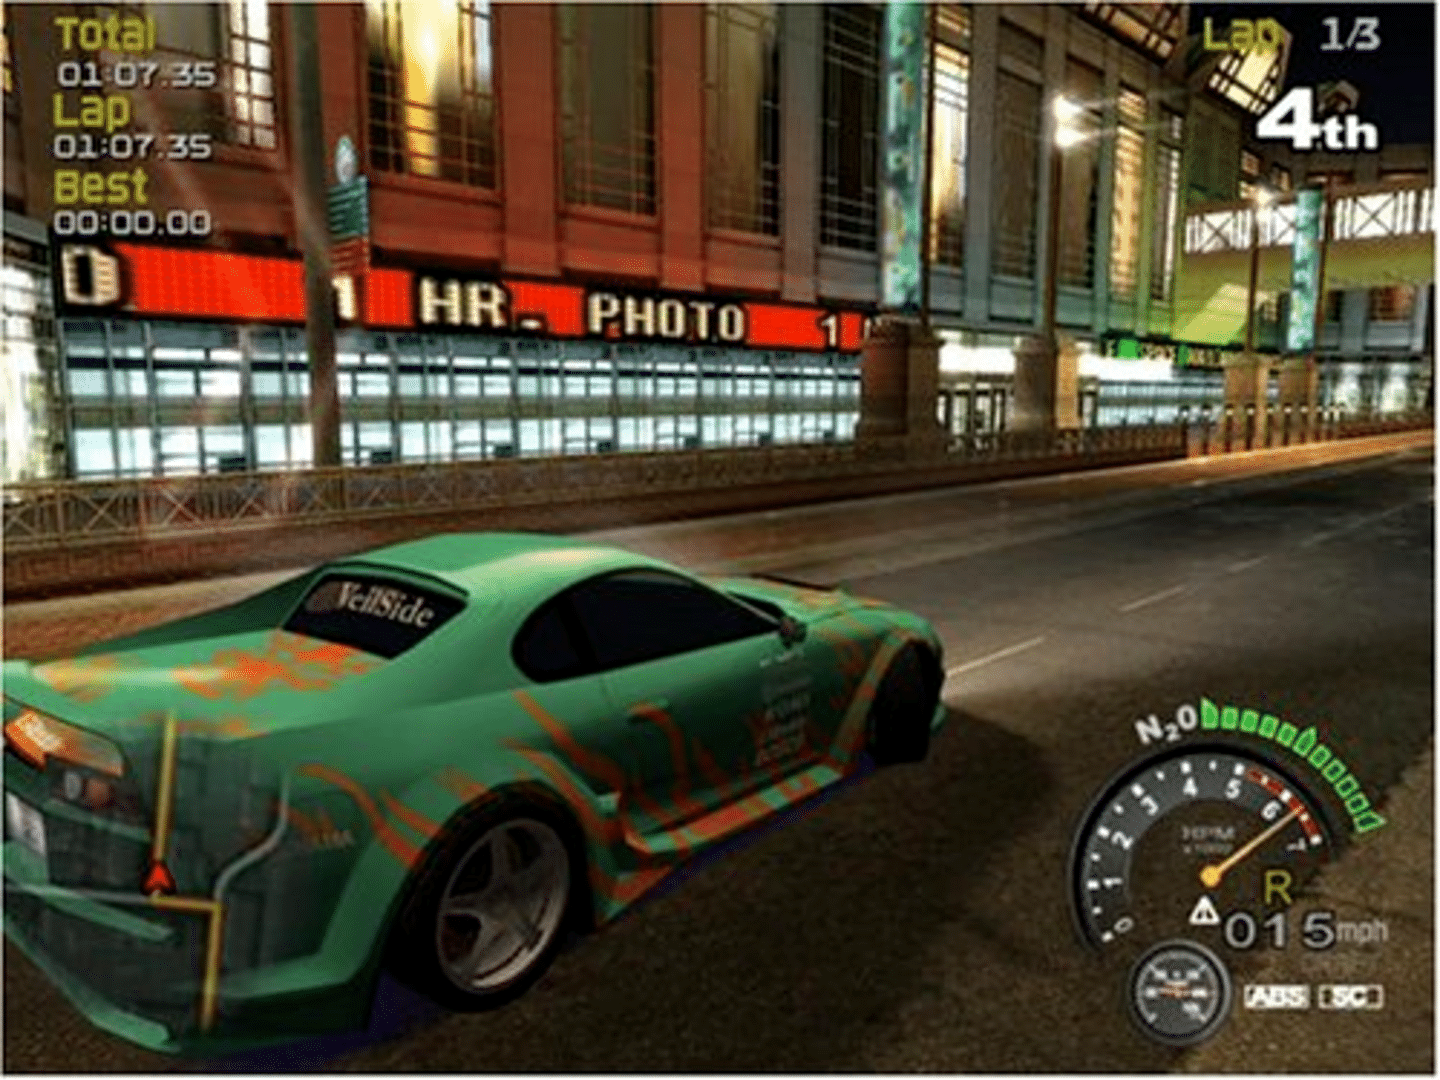 Street Racing Syndicate screenshot